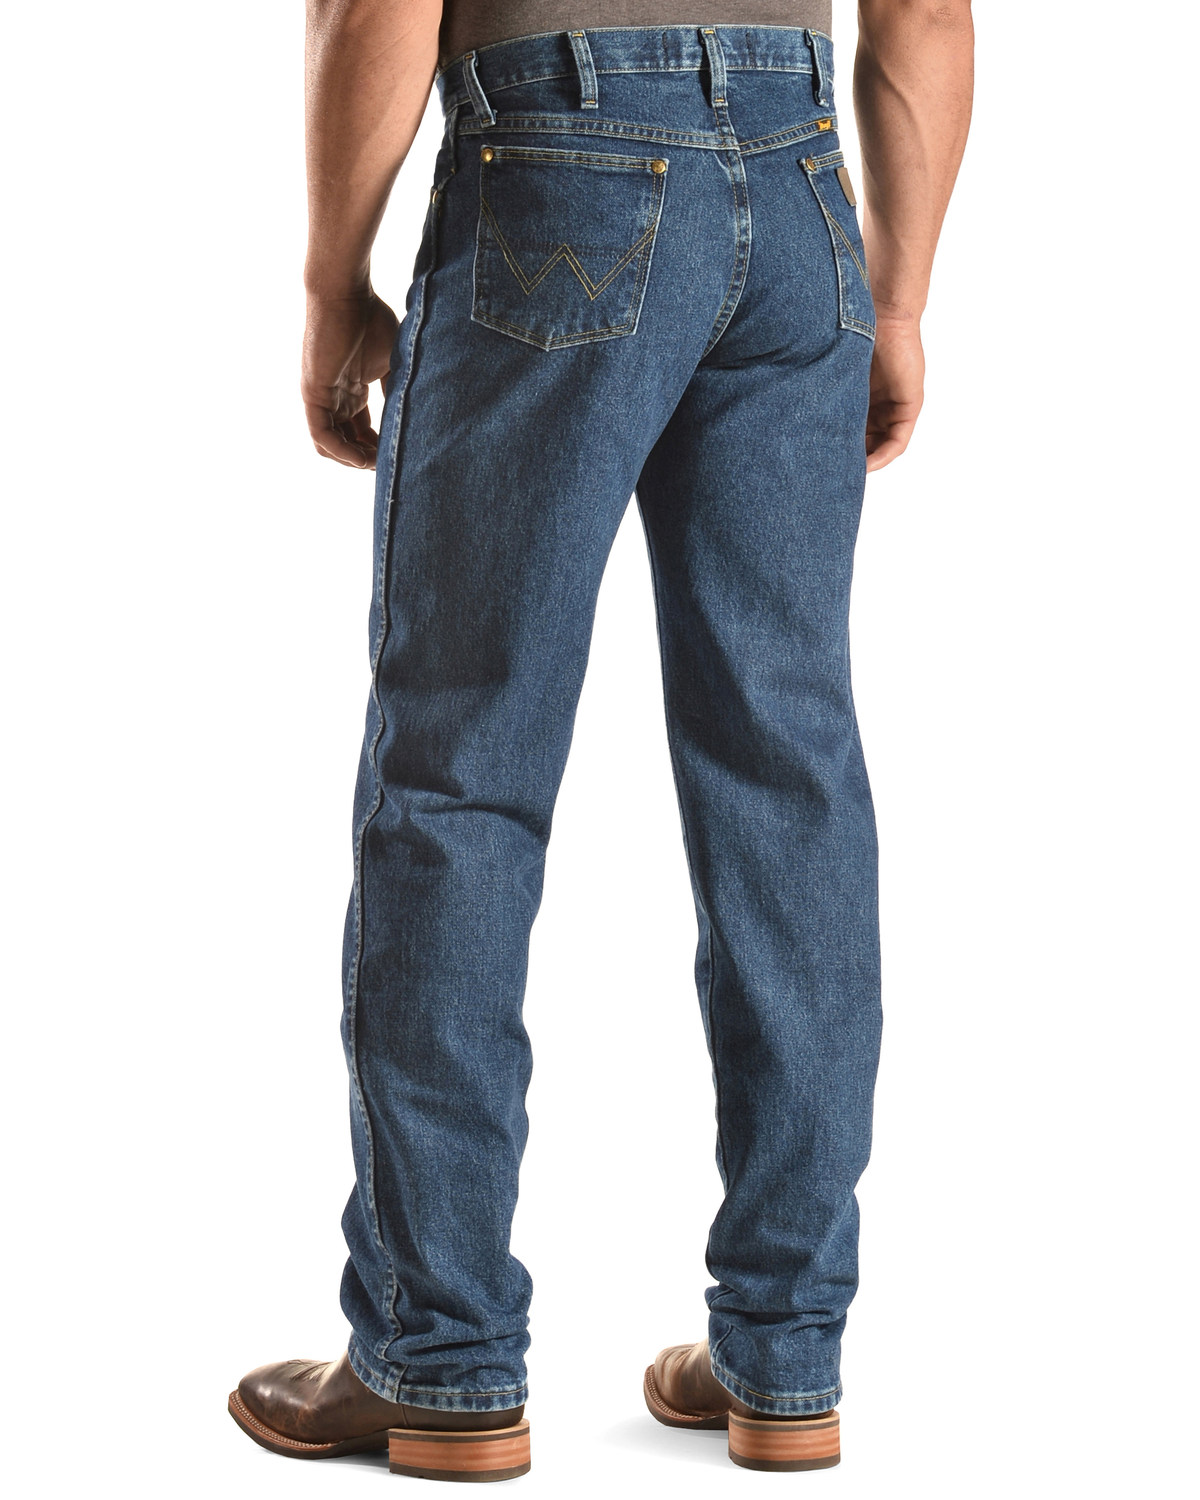 George Strait by Wrangler Men's Cowboy Cut Western Jeans